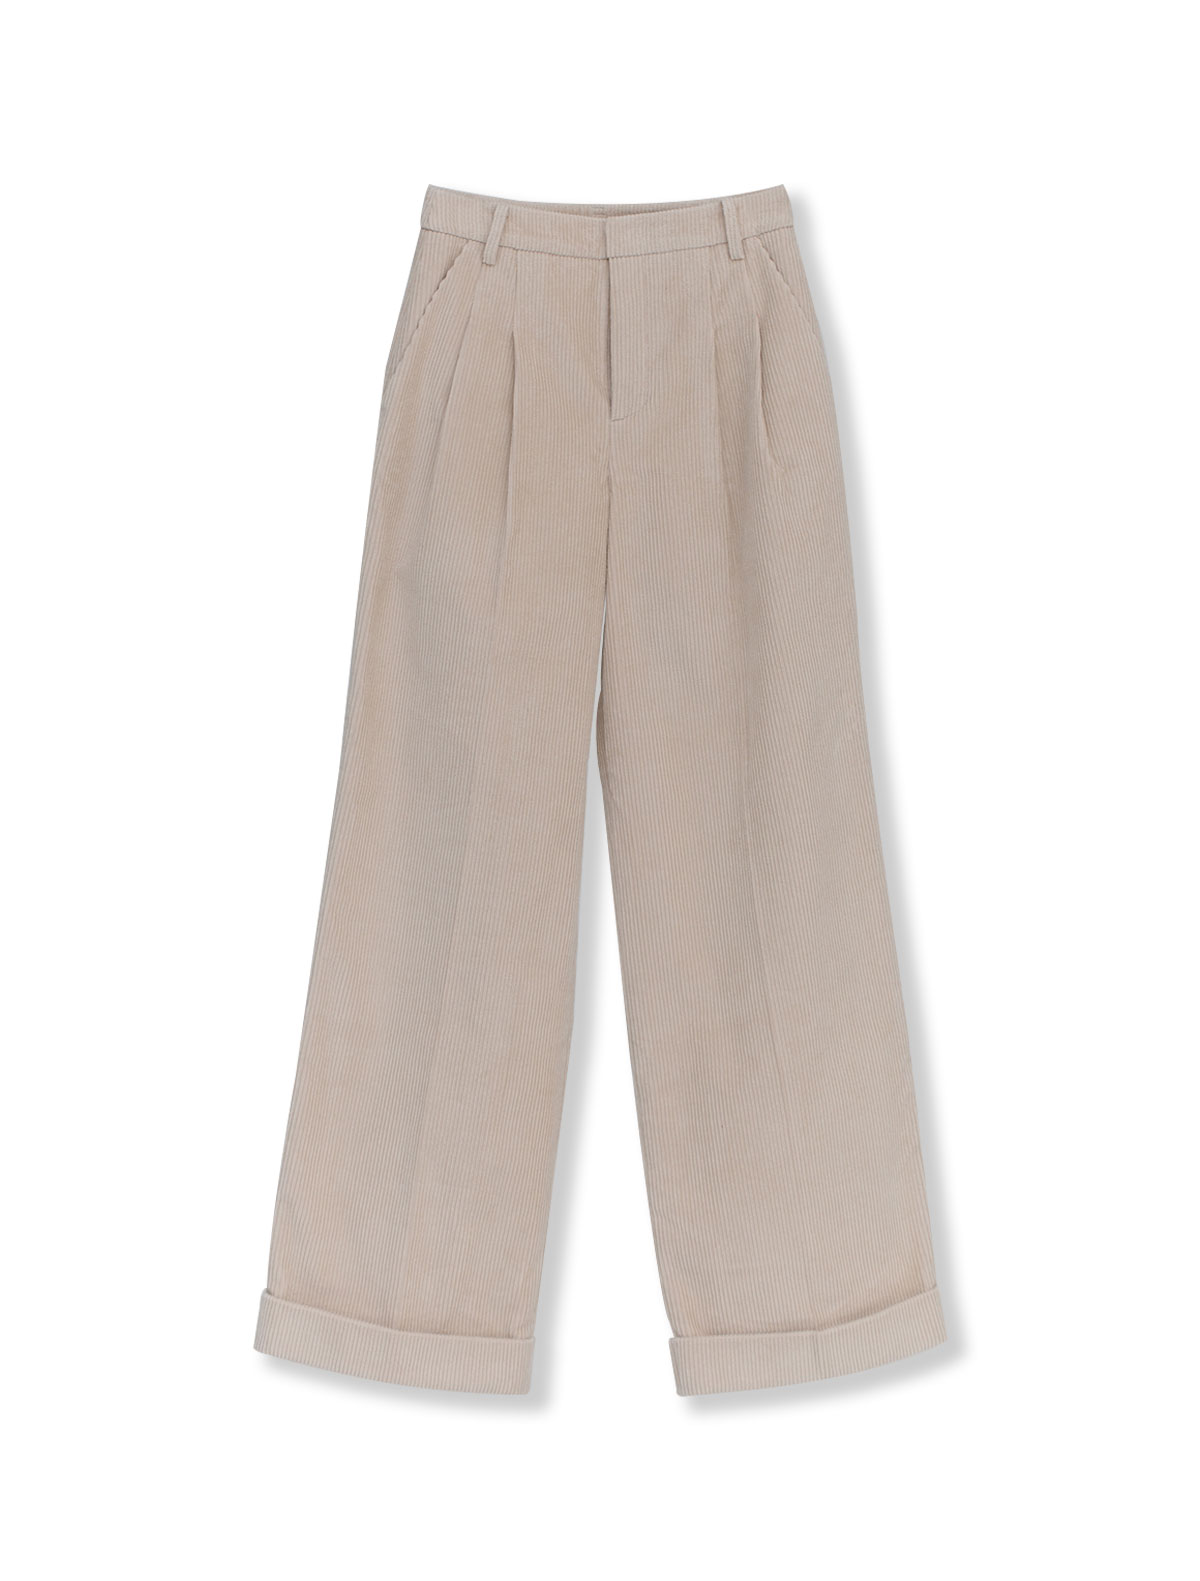 Cotton Corduroy Trousers (Beige)